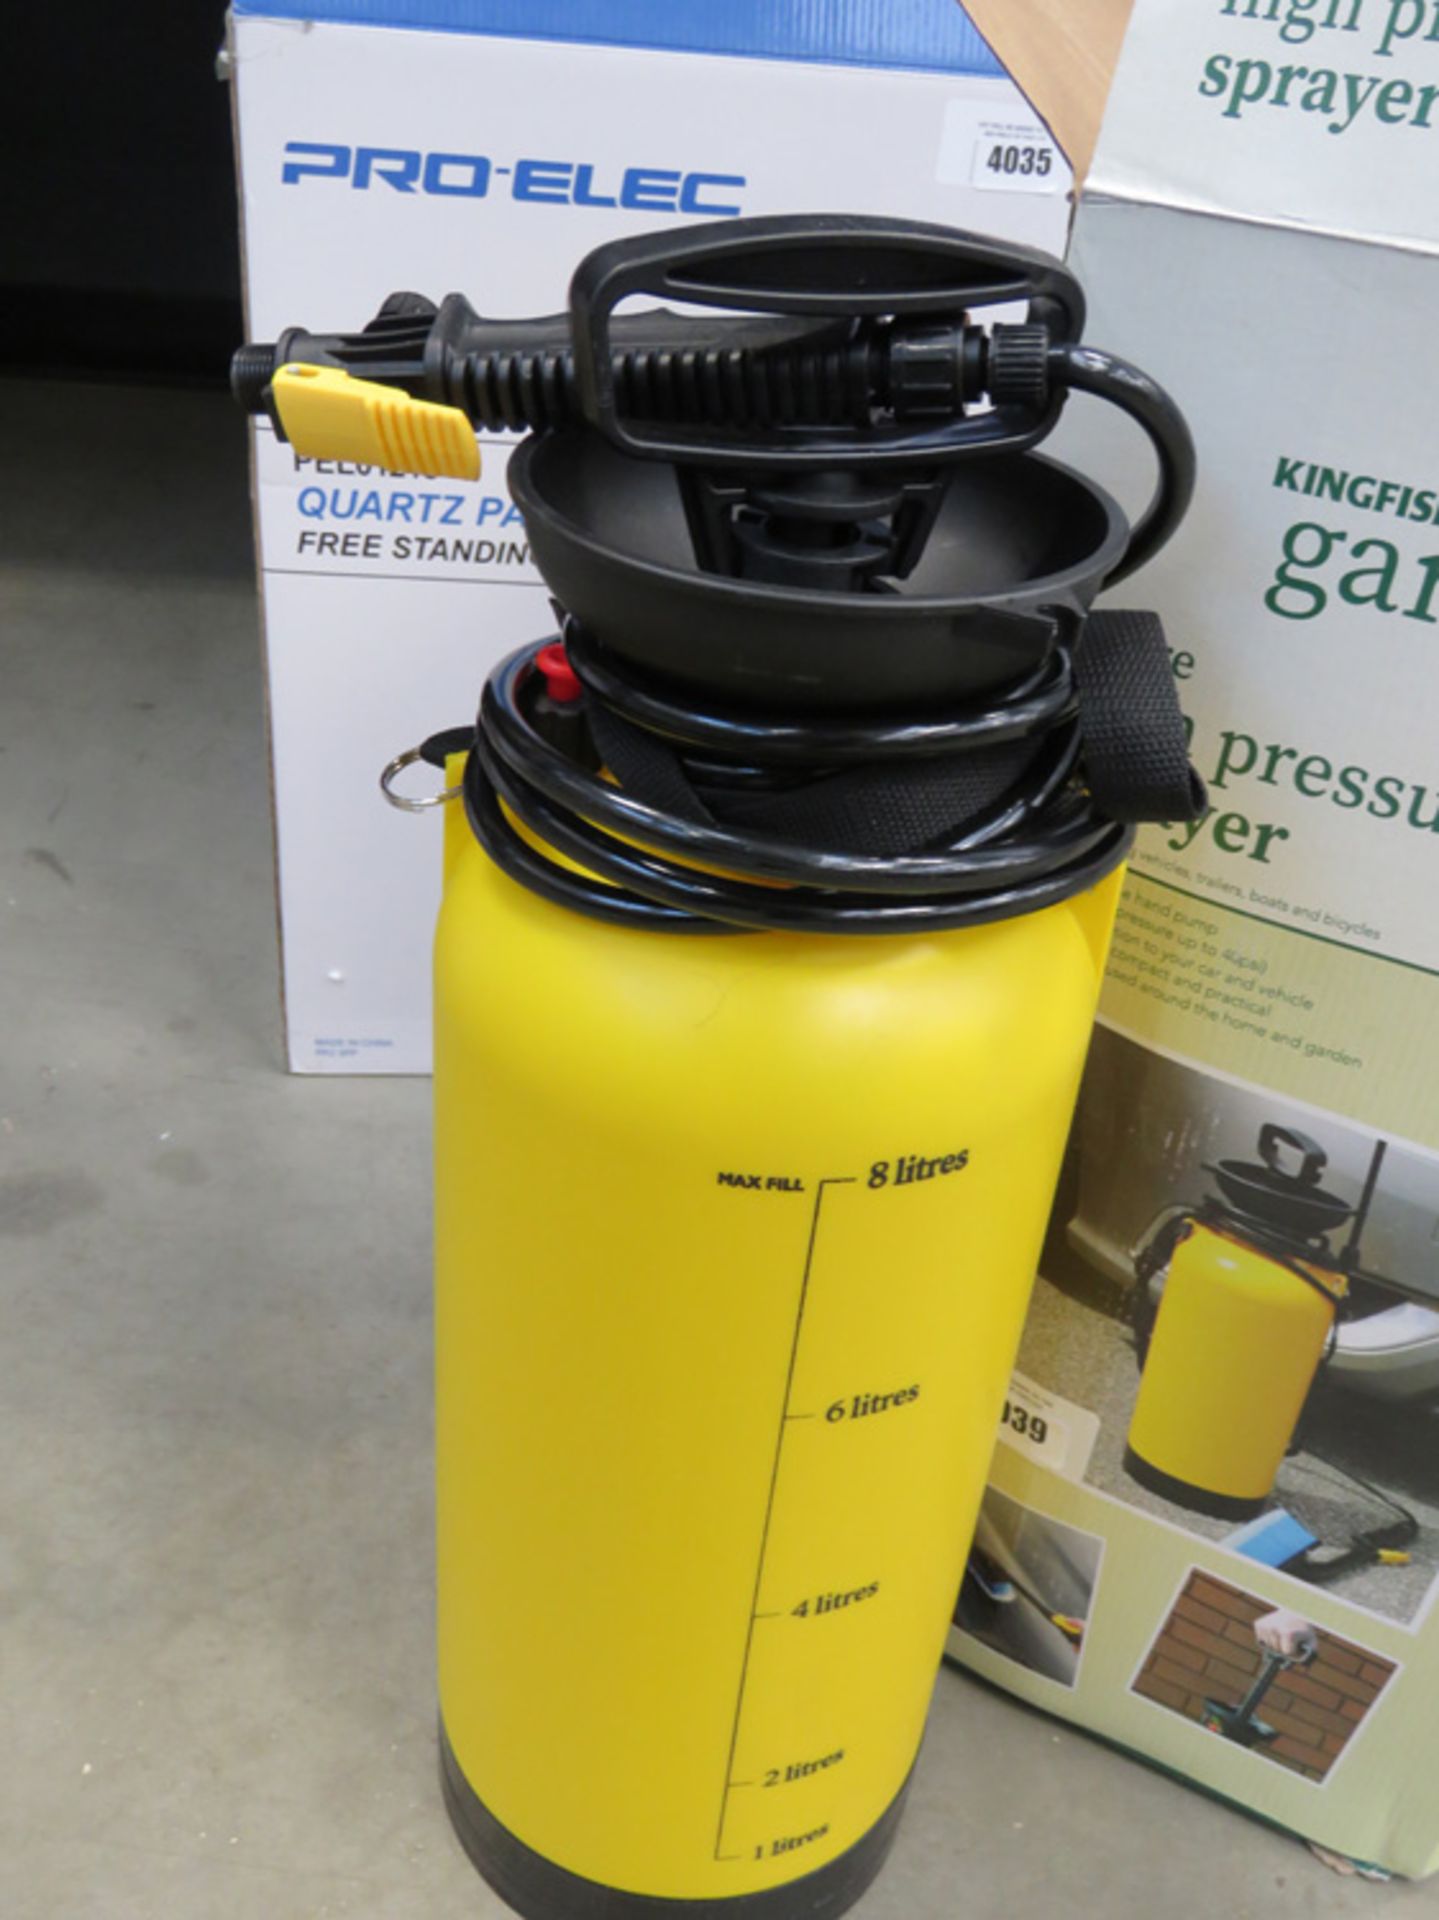 4046 - High pressure sprayer - Image 2 of 2